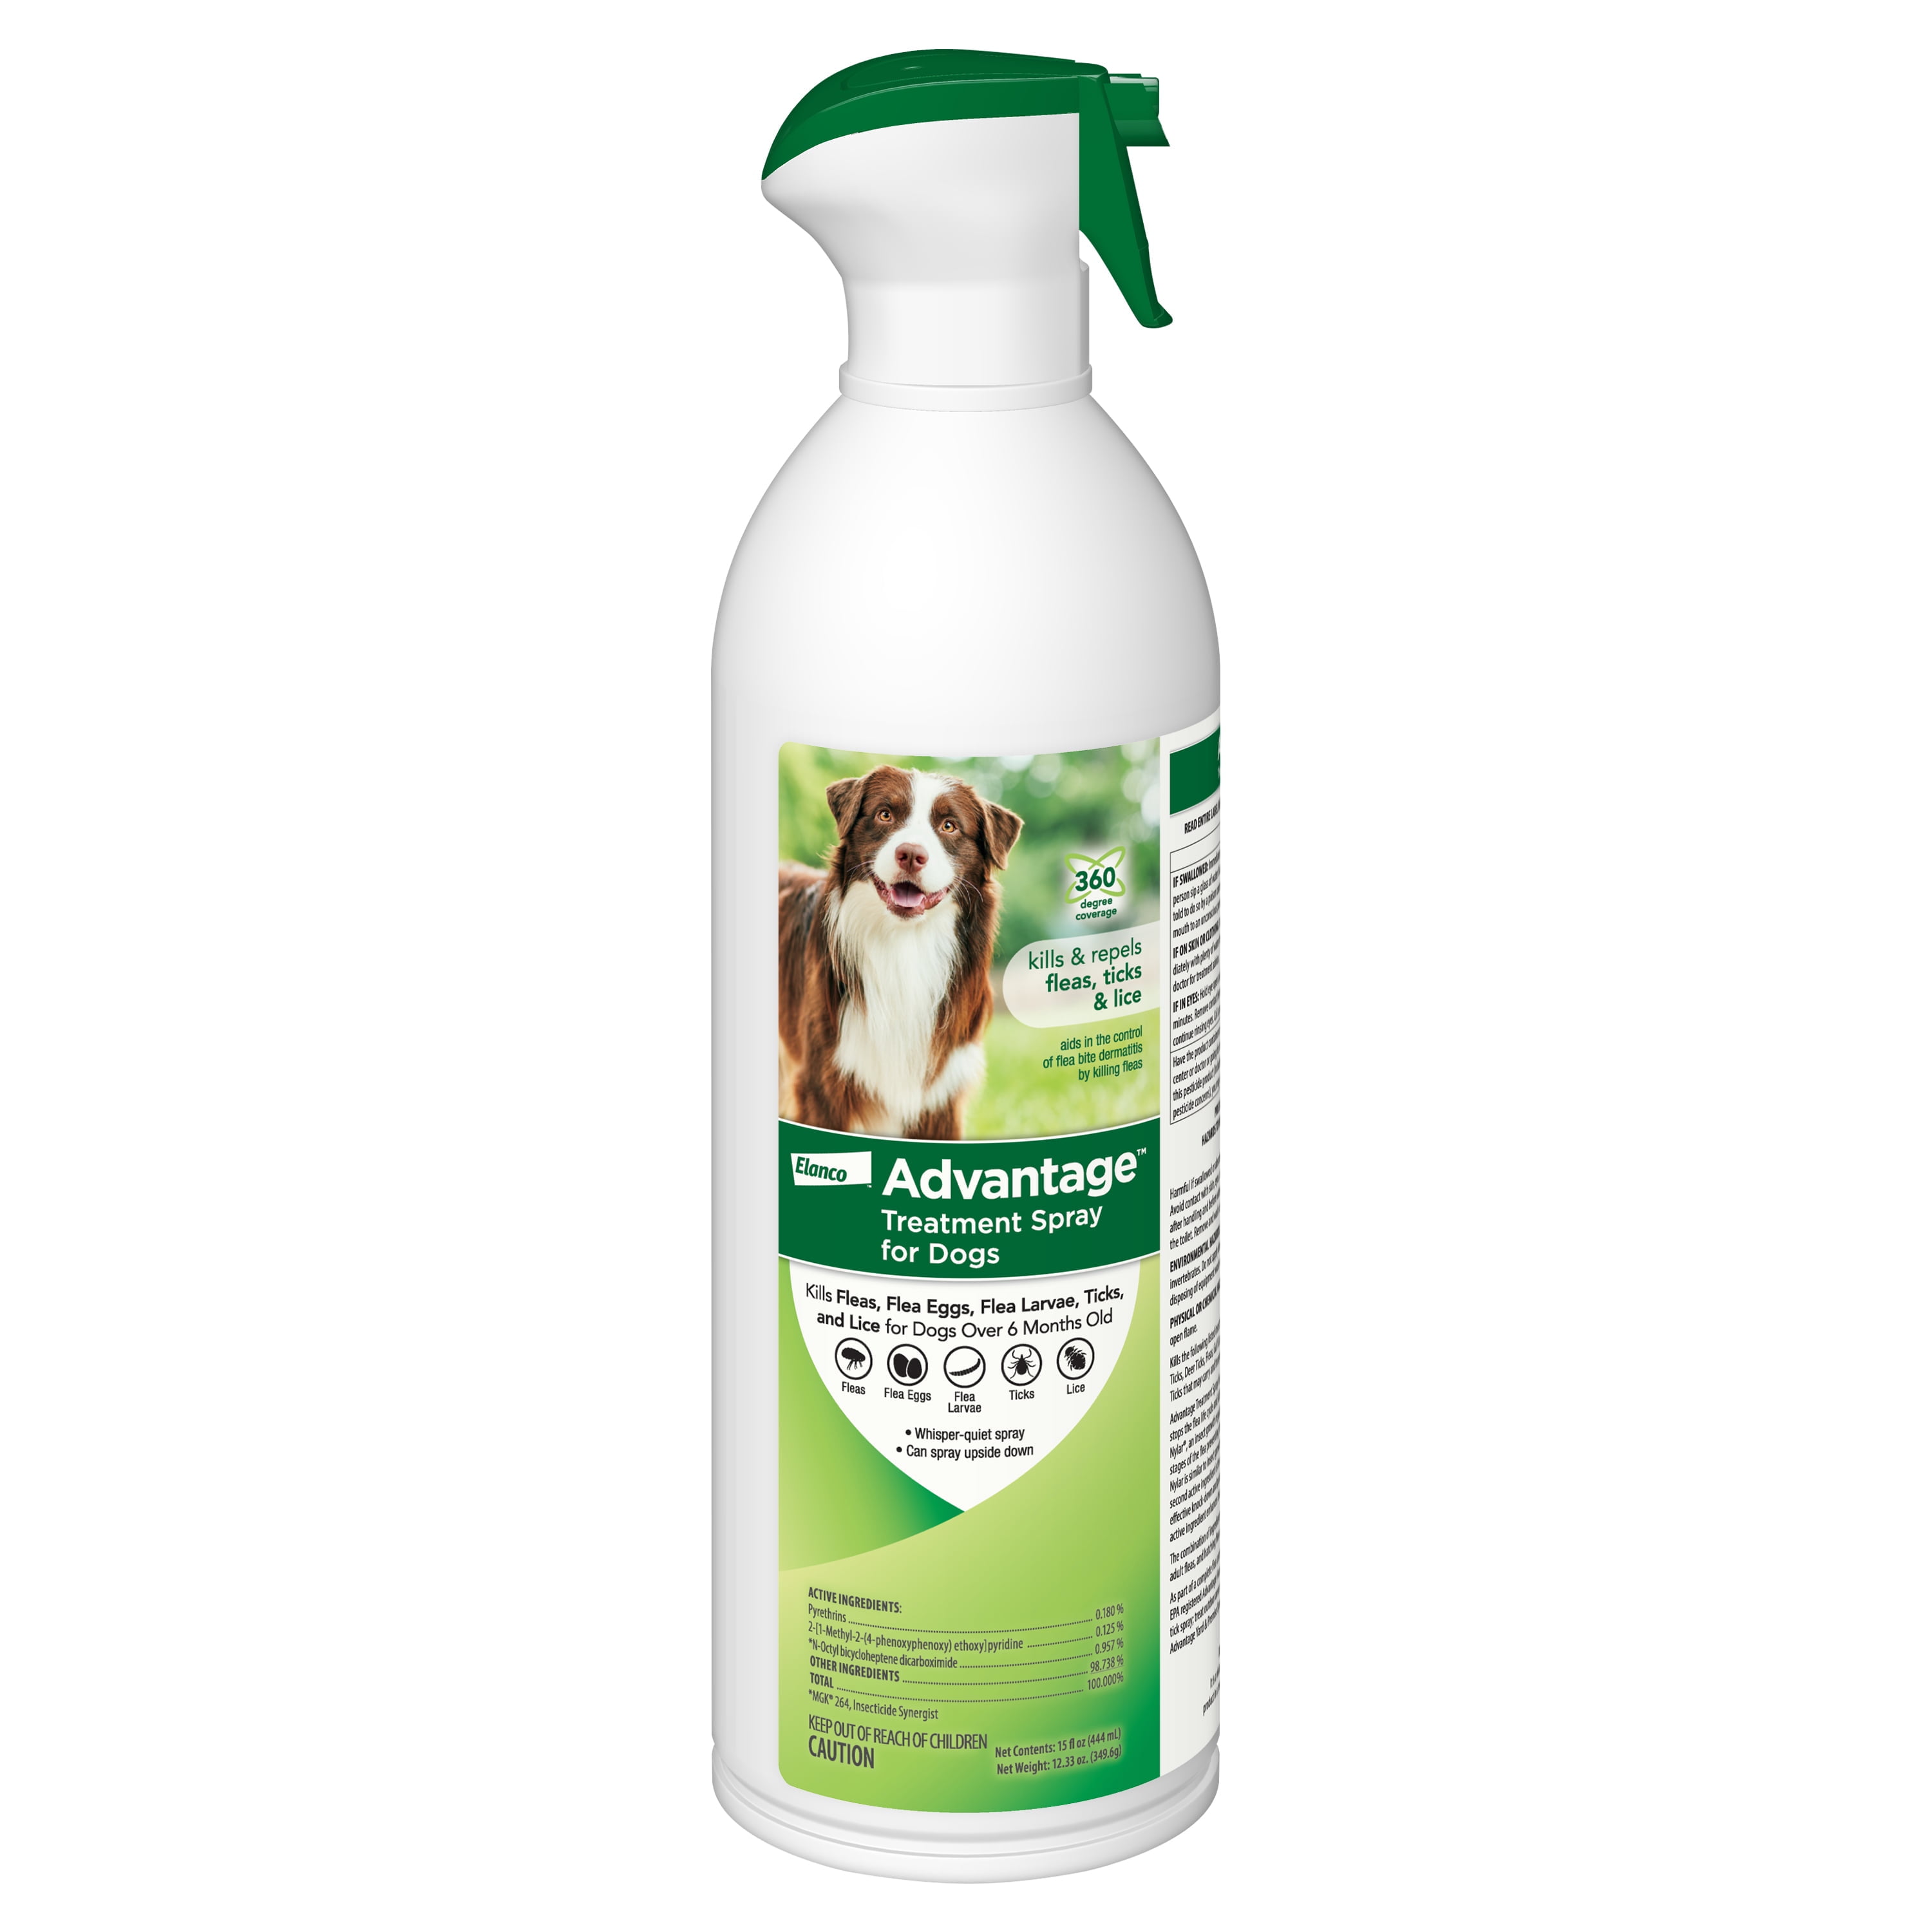 Bayer Advantage Flea & Tick Treatment Spray for Dogs, 8 oz